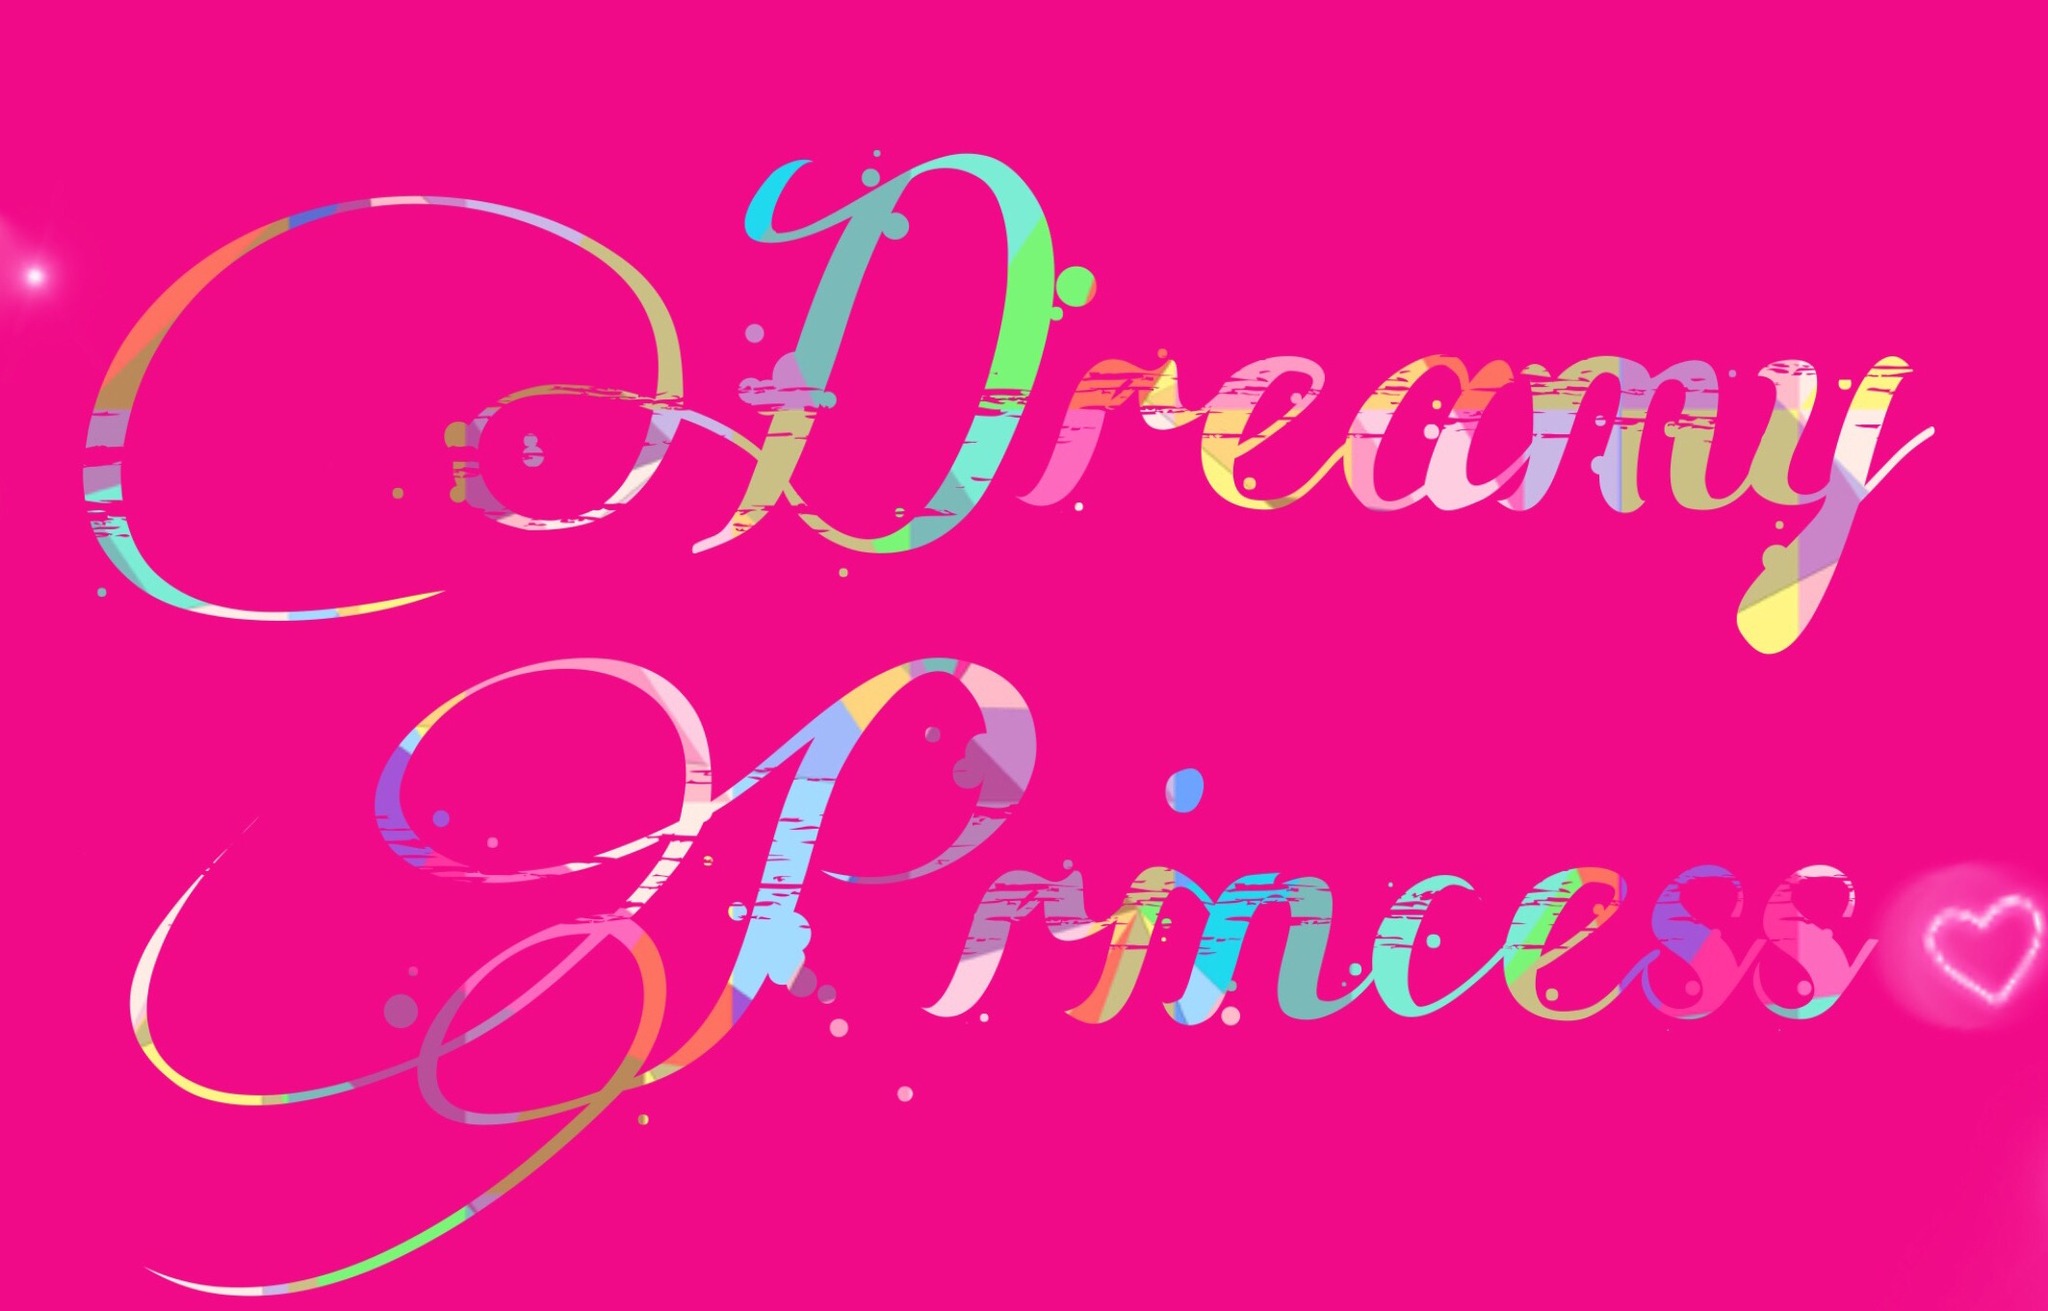 Dreamy Princess